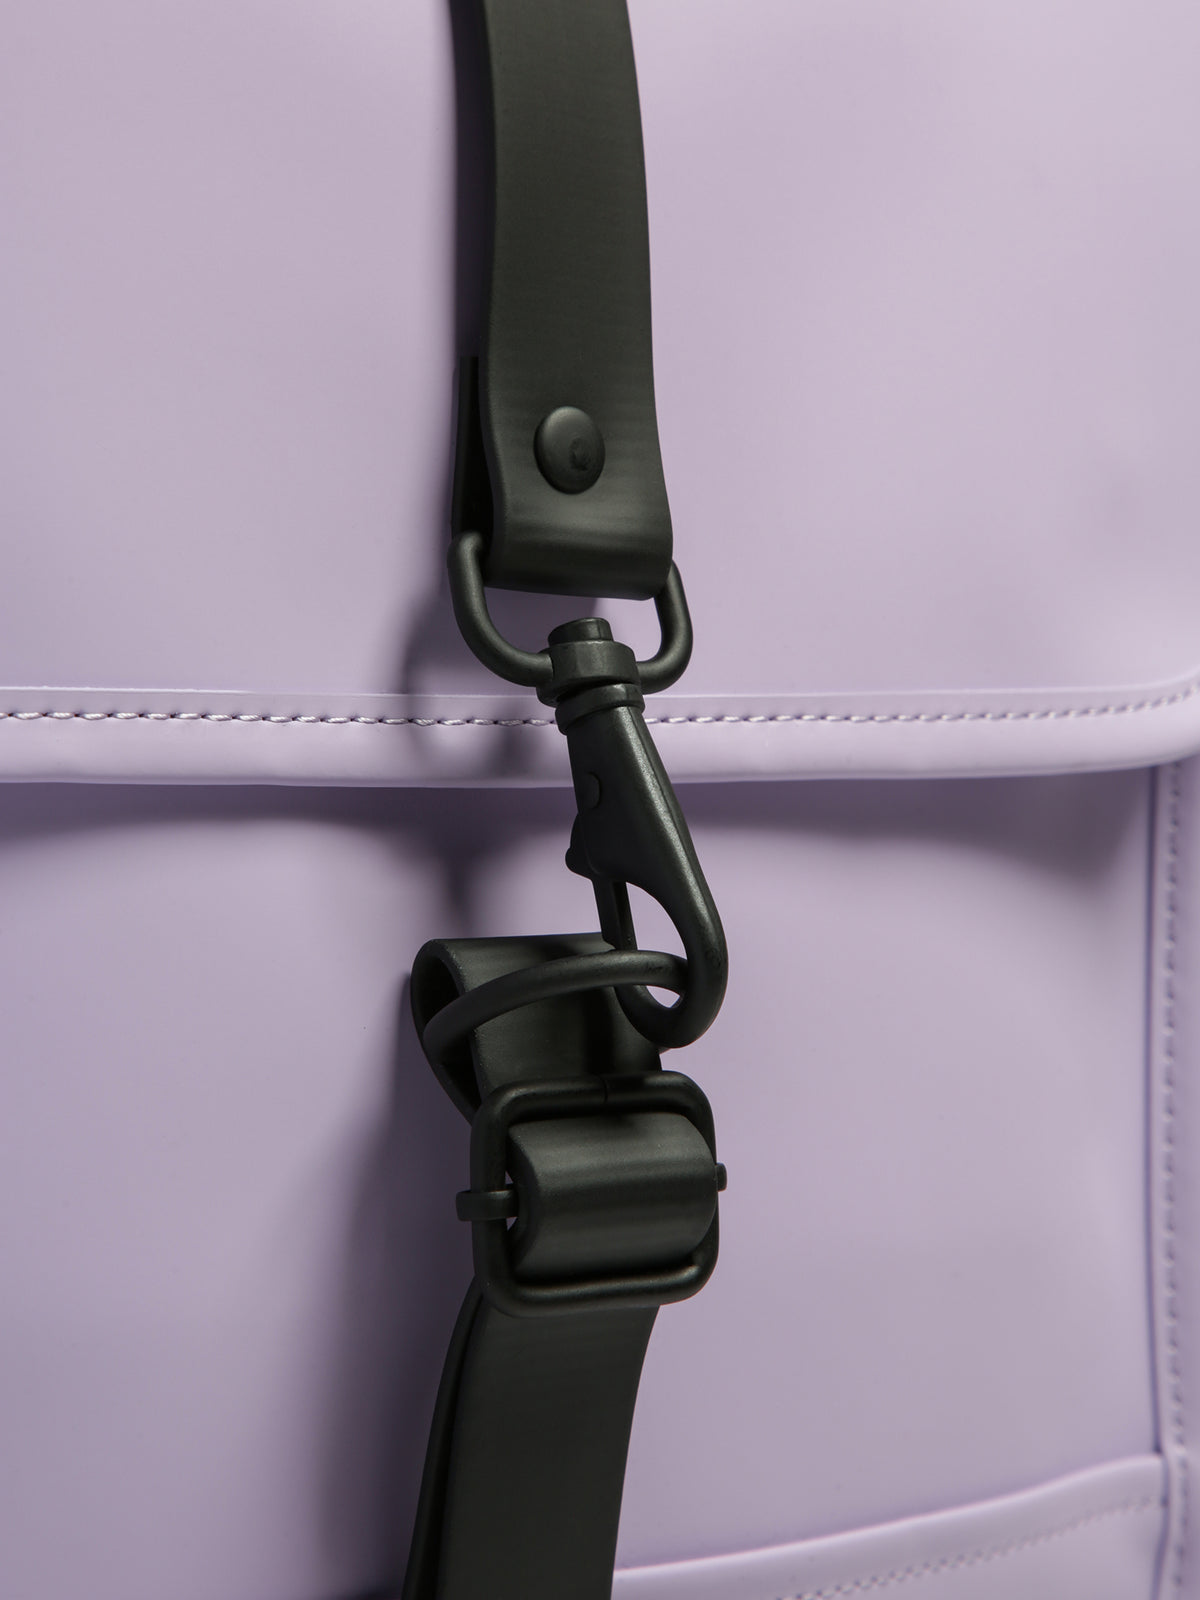 Mini Backpack in Lavender Purple